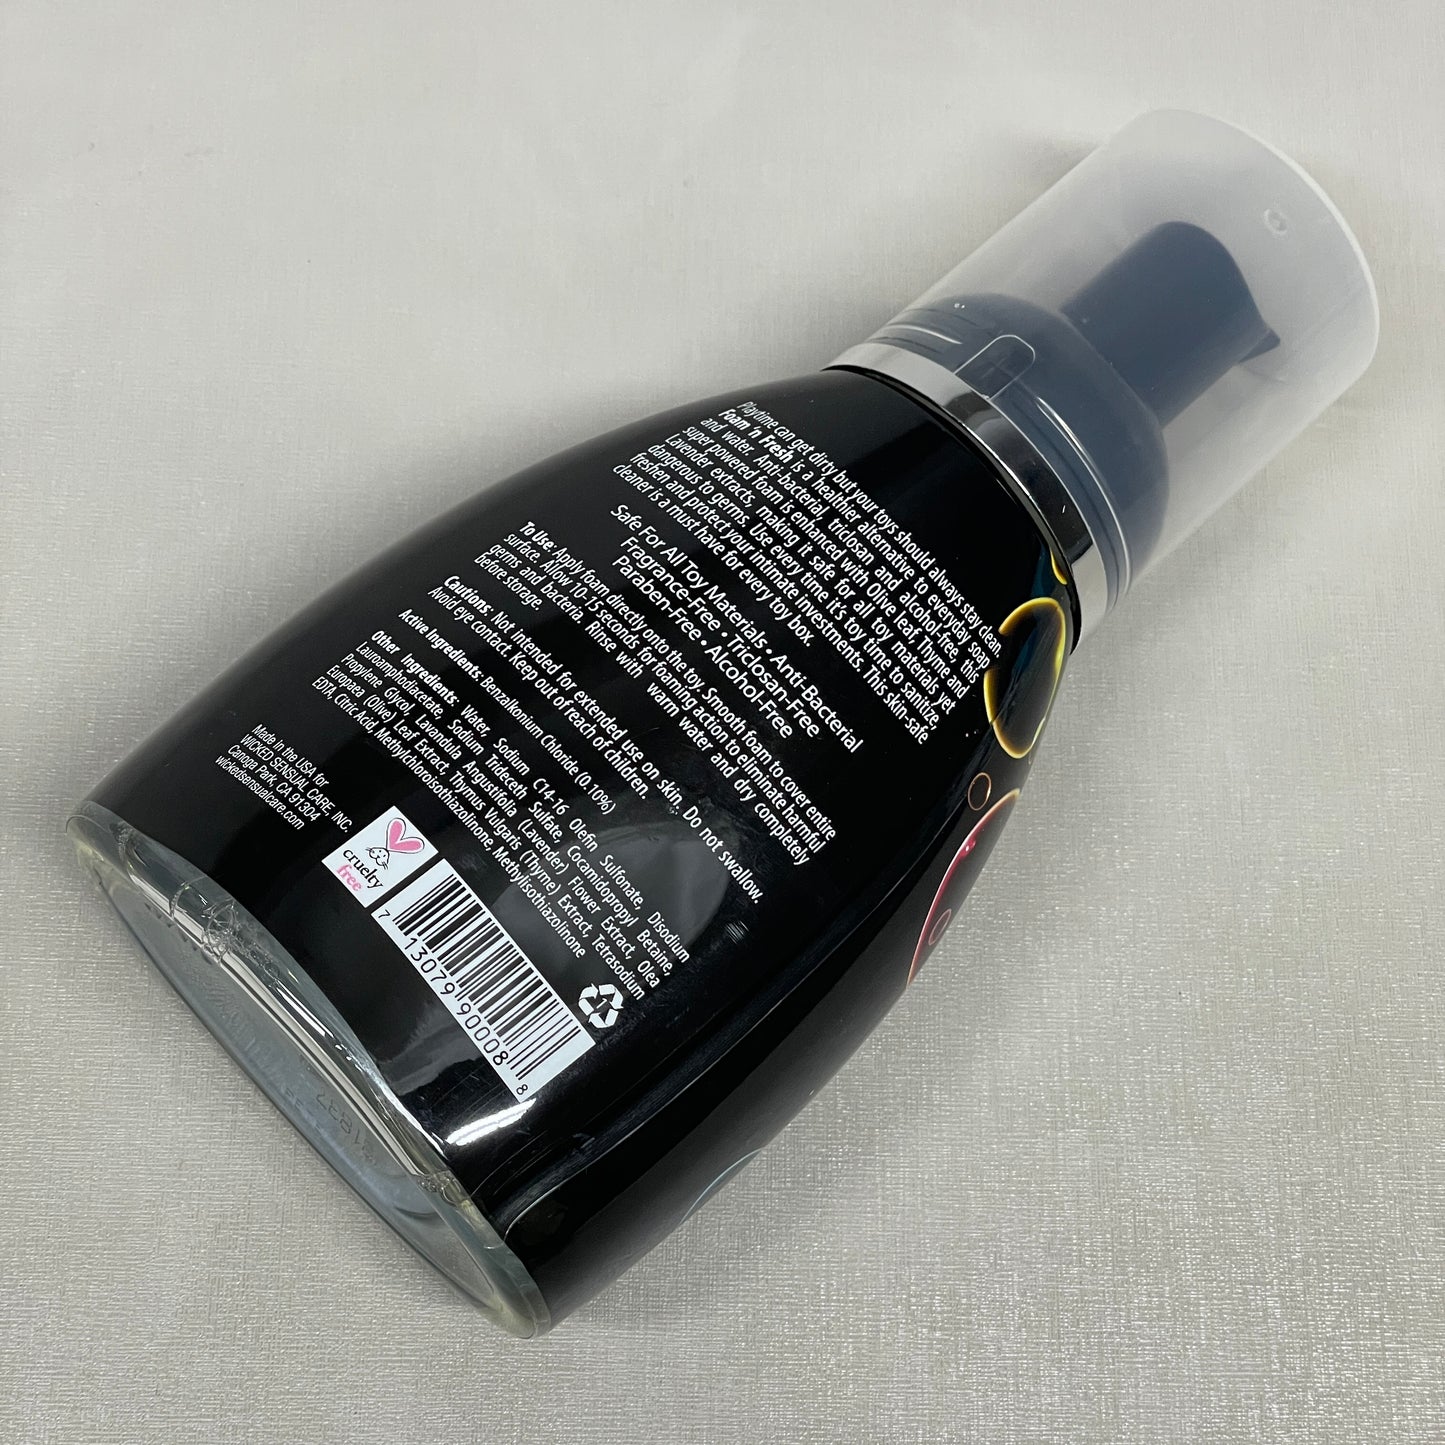 WICKED SENSUAL CARE Foam 'n Fresh Anti-Bacterial Foaming Toy Cleaner Fragrance Free 8 oz (New)